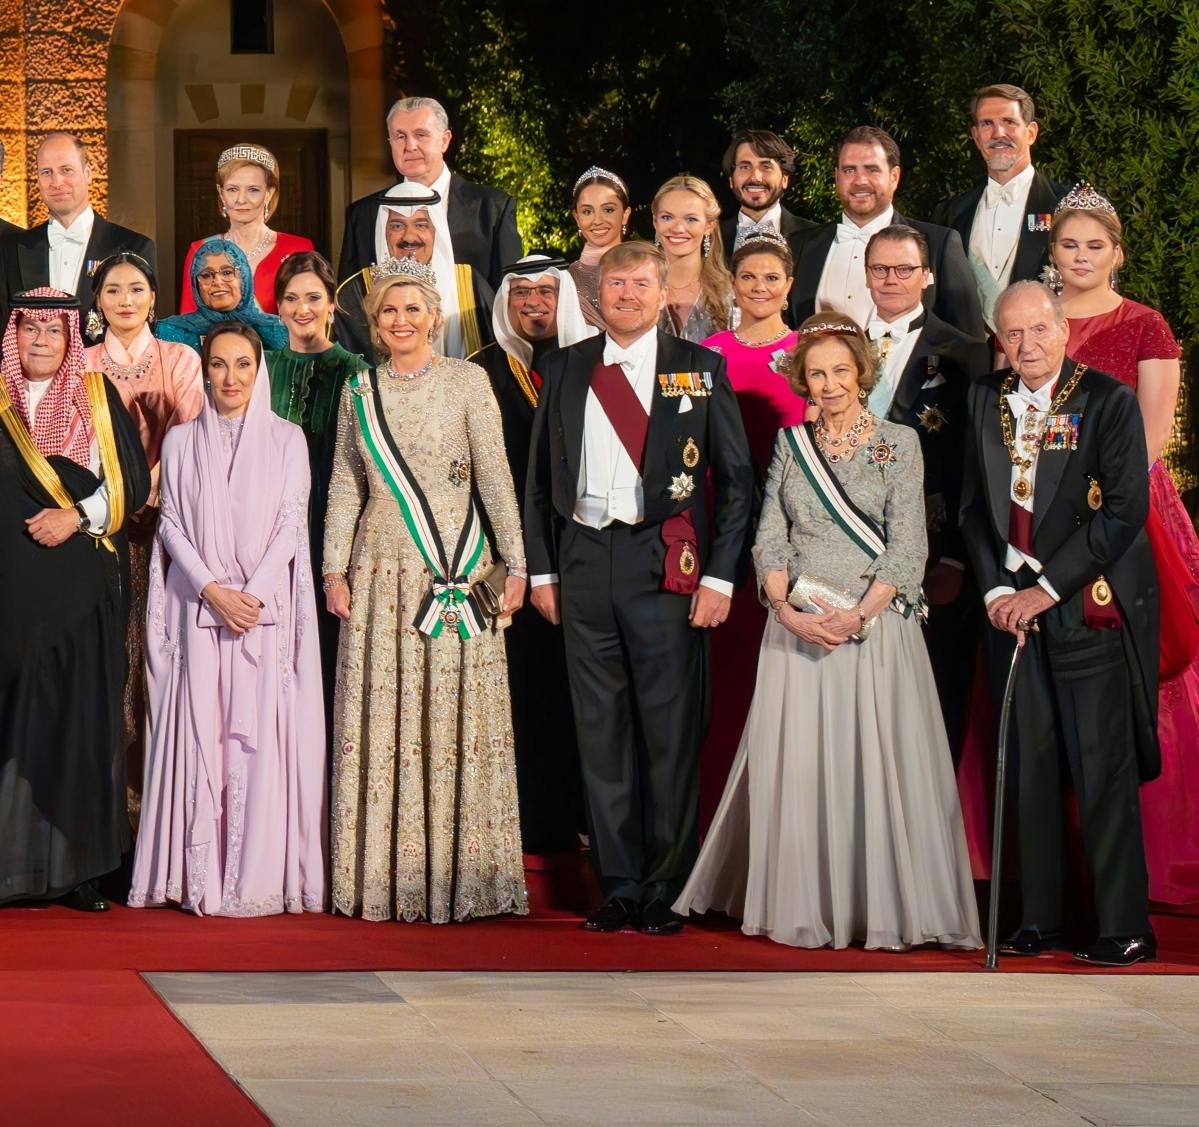 Fra venstre:

1 række: Khaled bin Musaed bin Saif bin Abdulaziz Al Saif (kronprinsesse Rajwas far), Azza bint Nayef bin Abdulaziz bin Ahmed Al Sudairi (kronprinsesse Rajwas mor), dronning Maxima (Holland), kong Willem-Alexander (Holland), dronning 